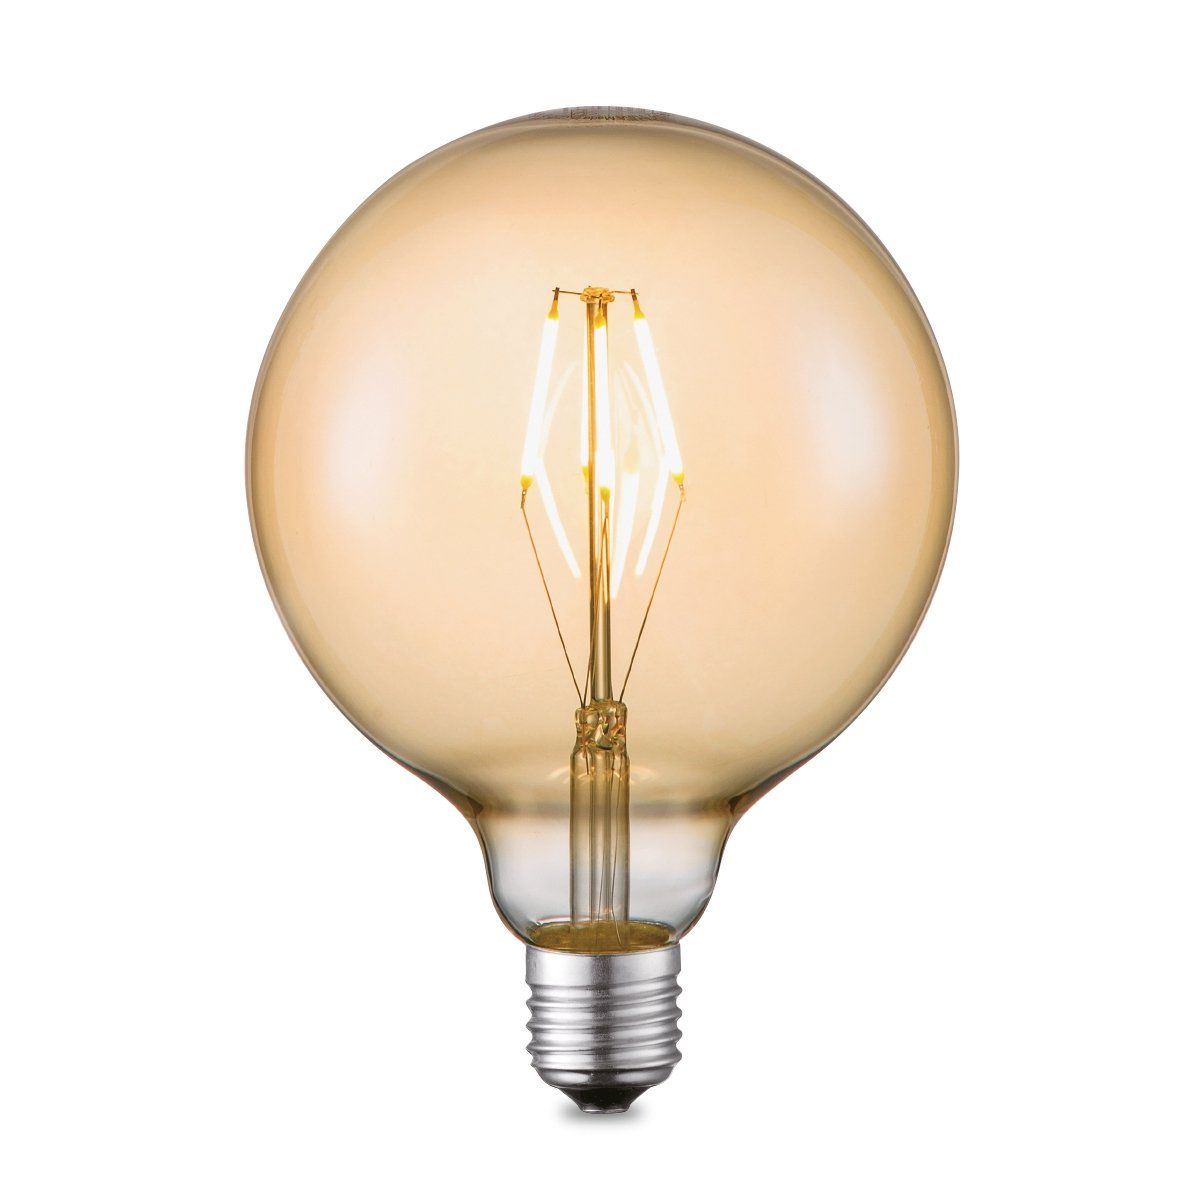 LED globe lamp 125 E27 6W 2800K